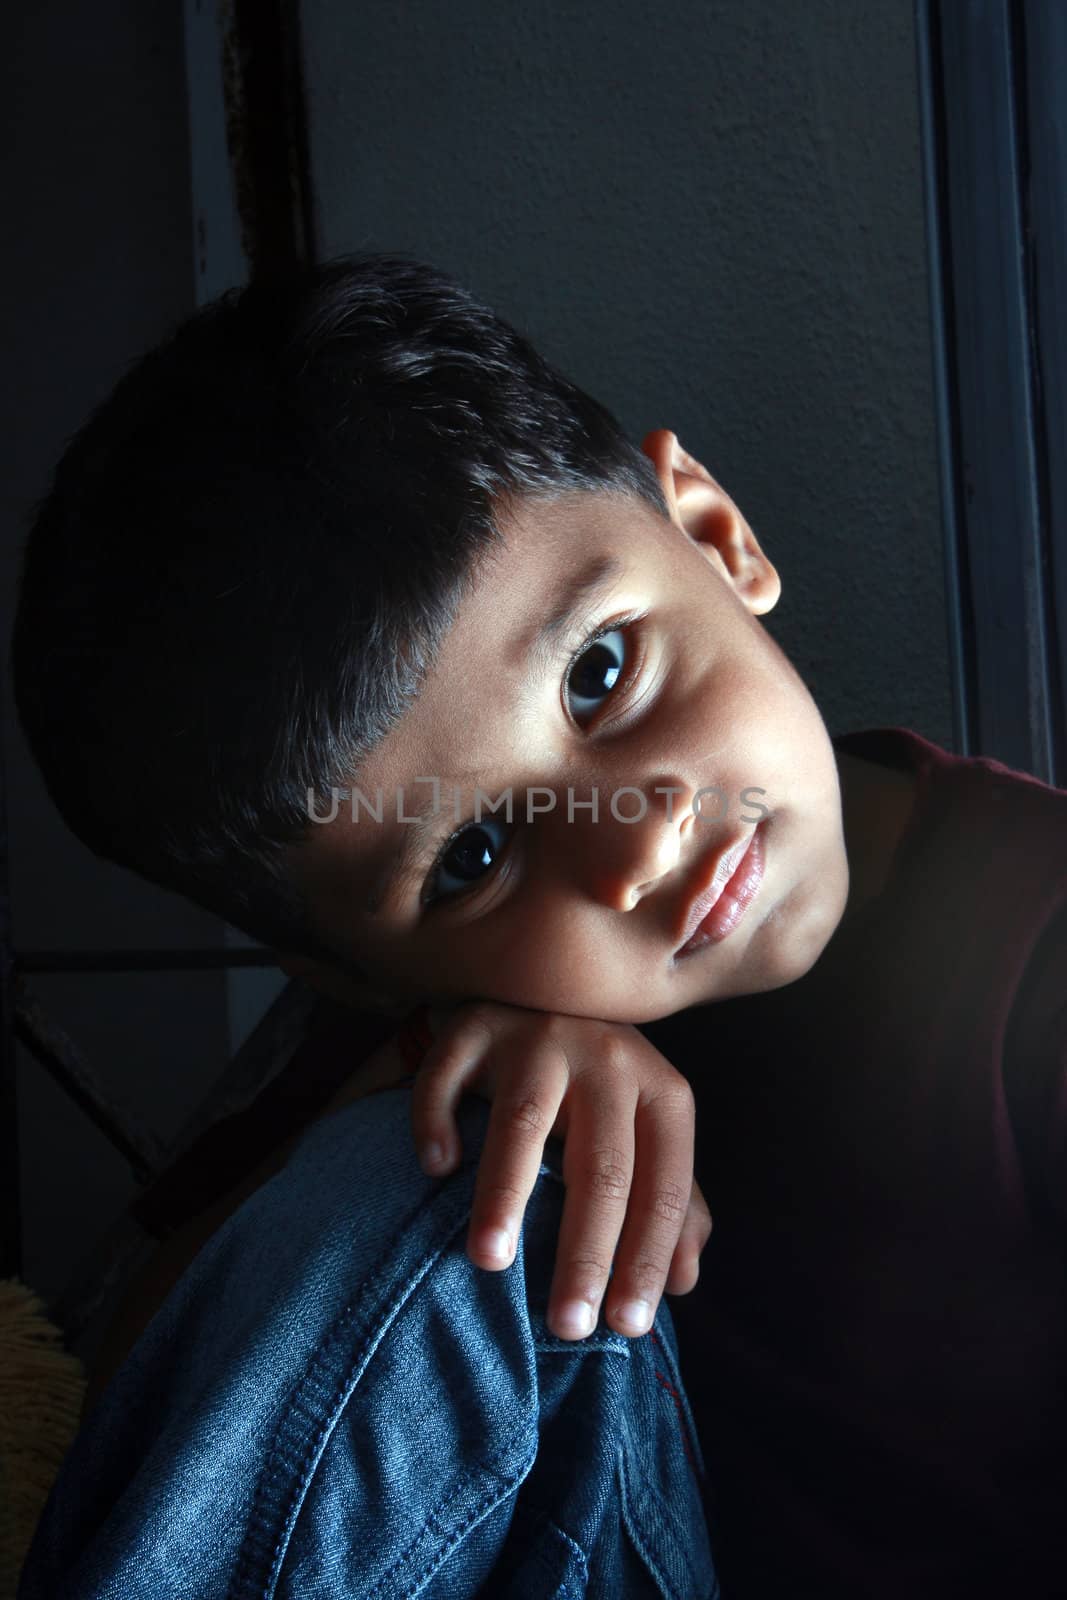 A portrait of an innocent Indian boy in sad mood.